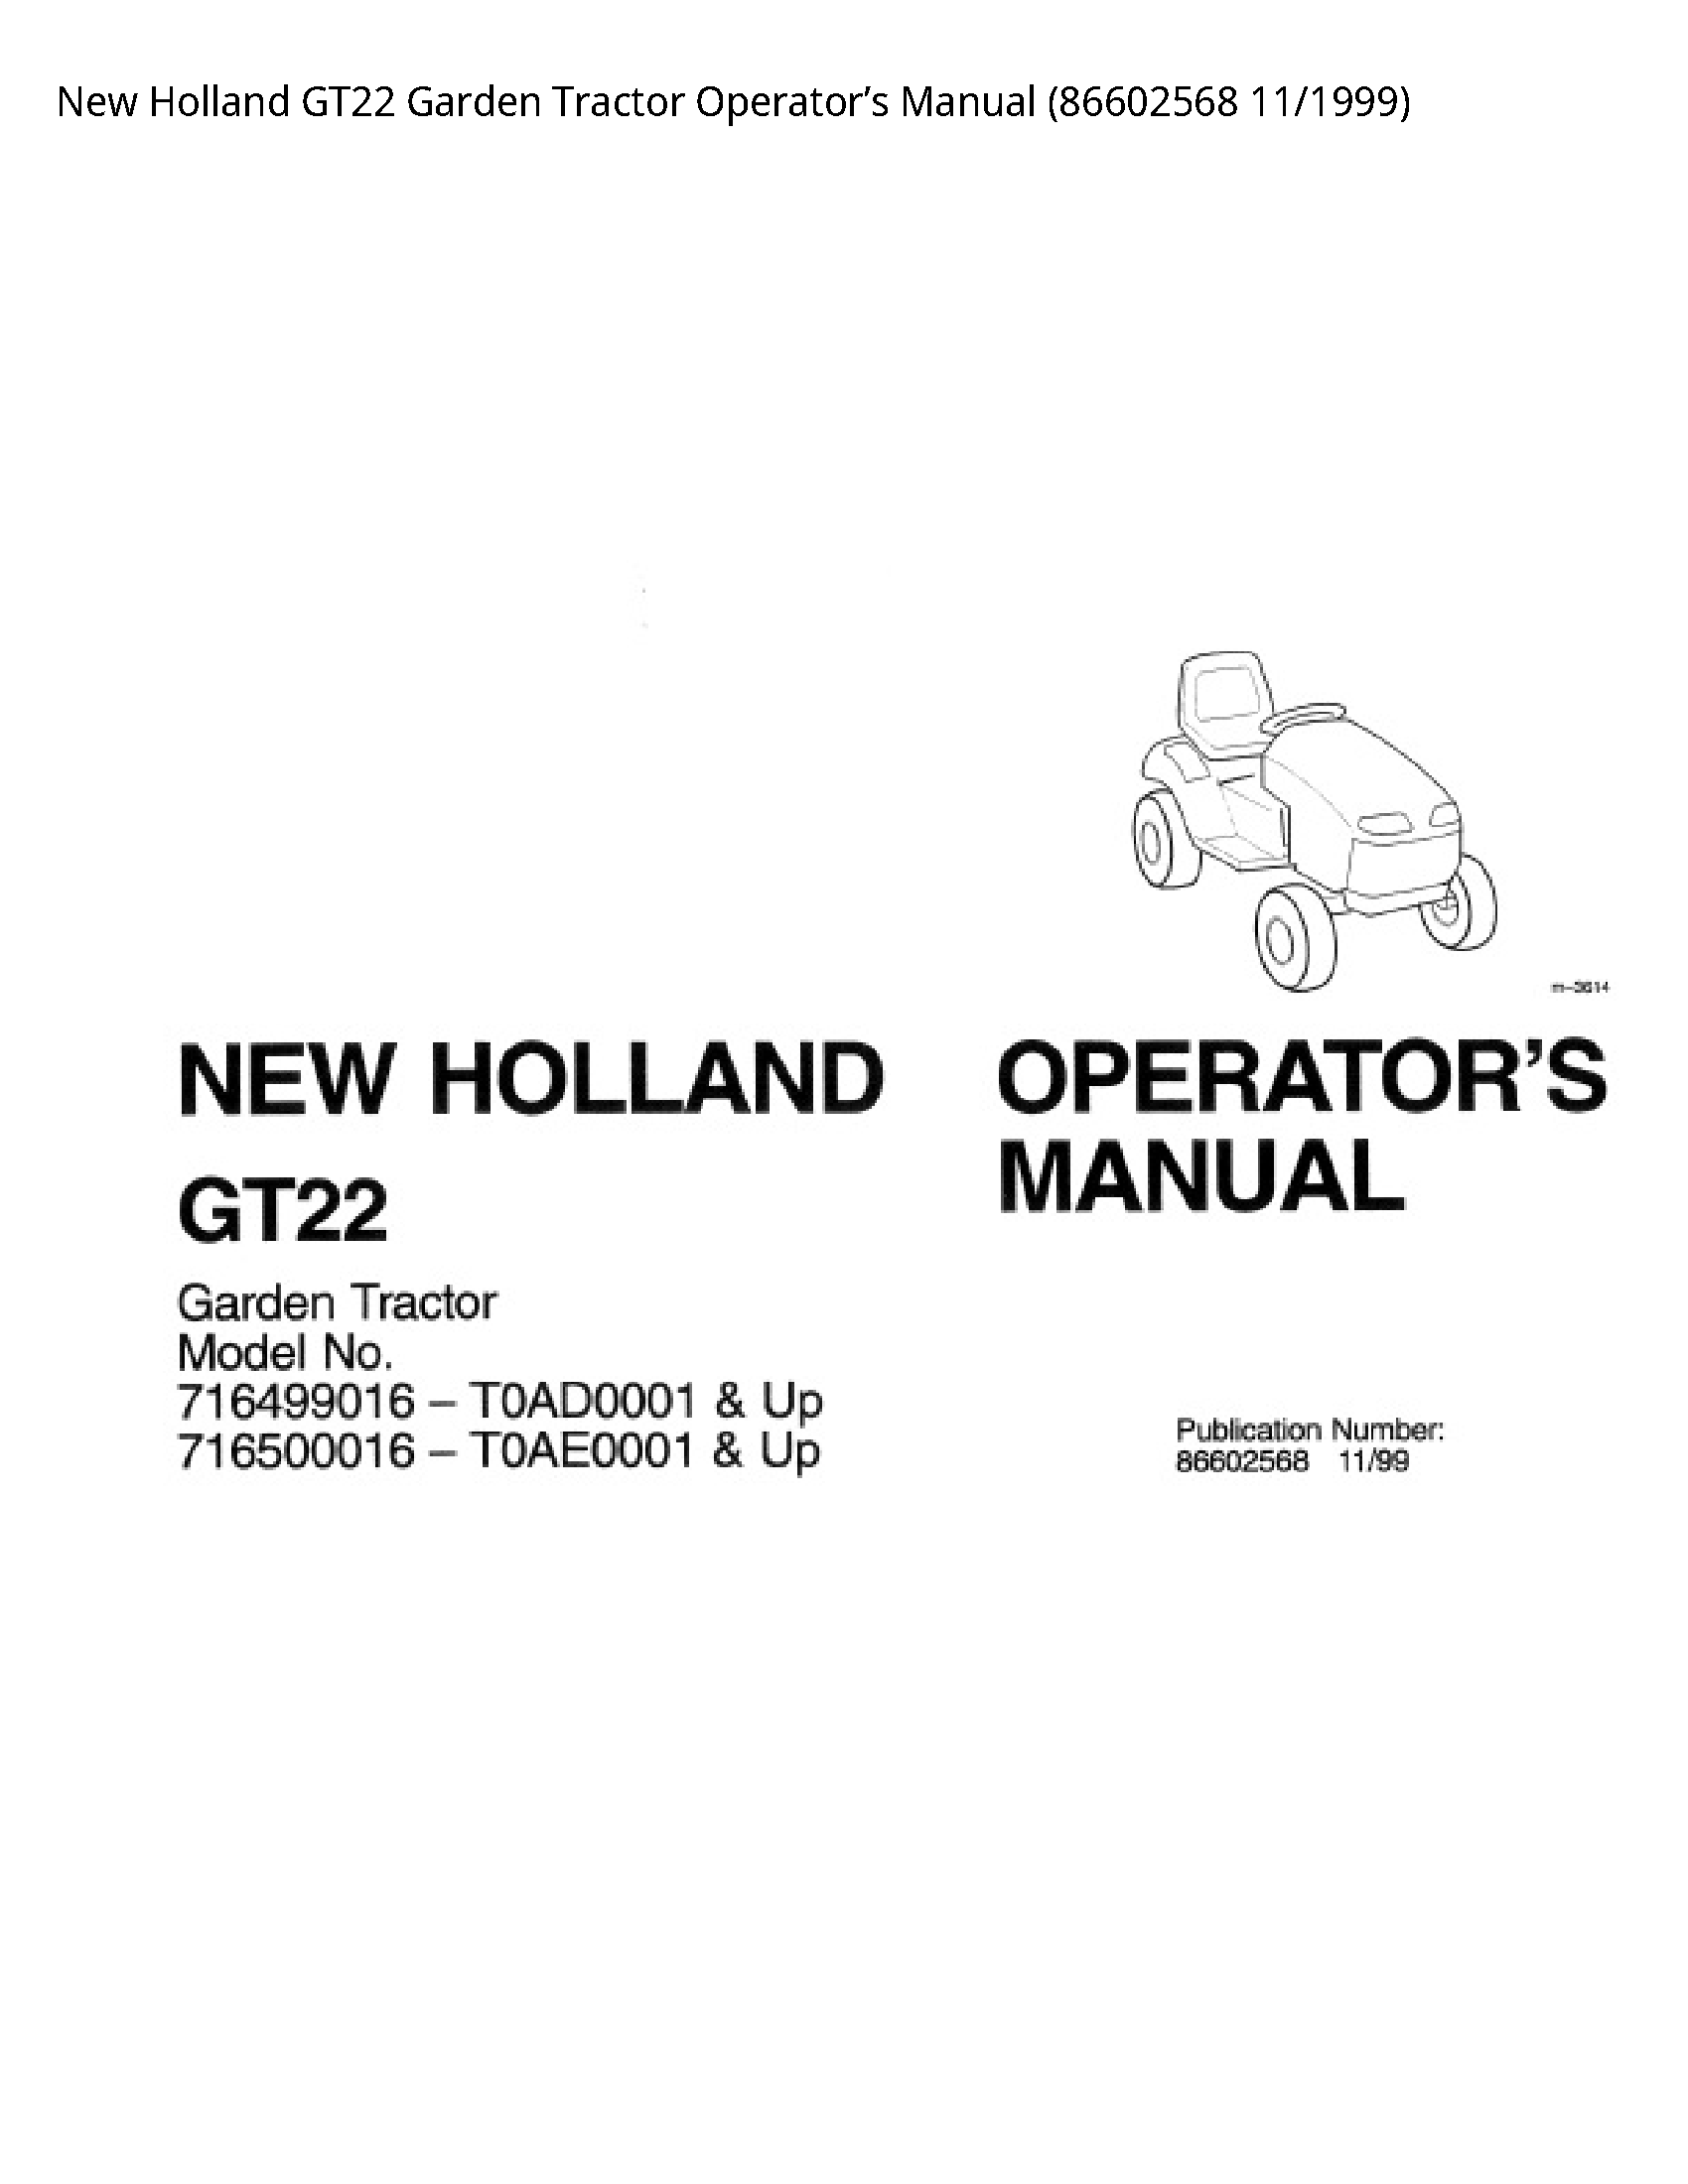 New Holland GT22 Garden Tractor Operator’s manual